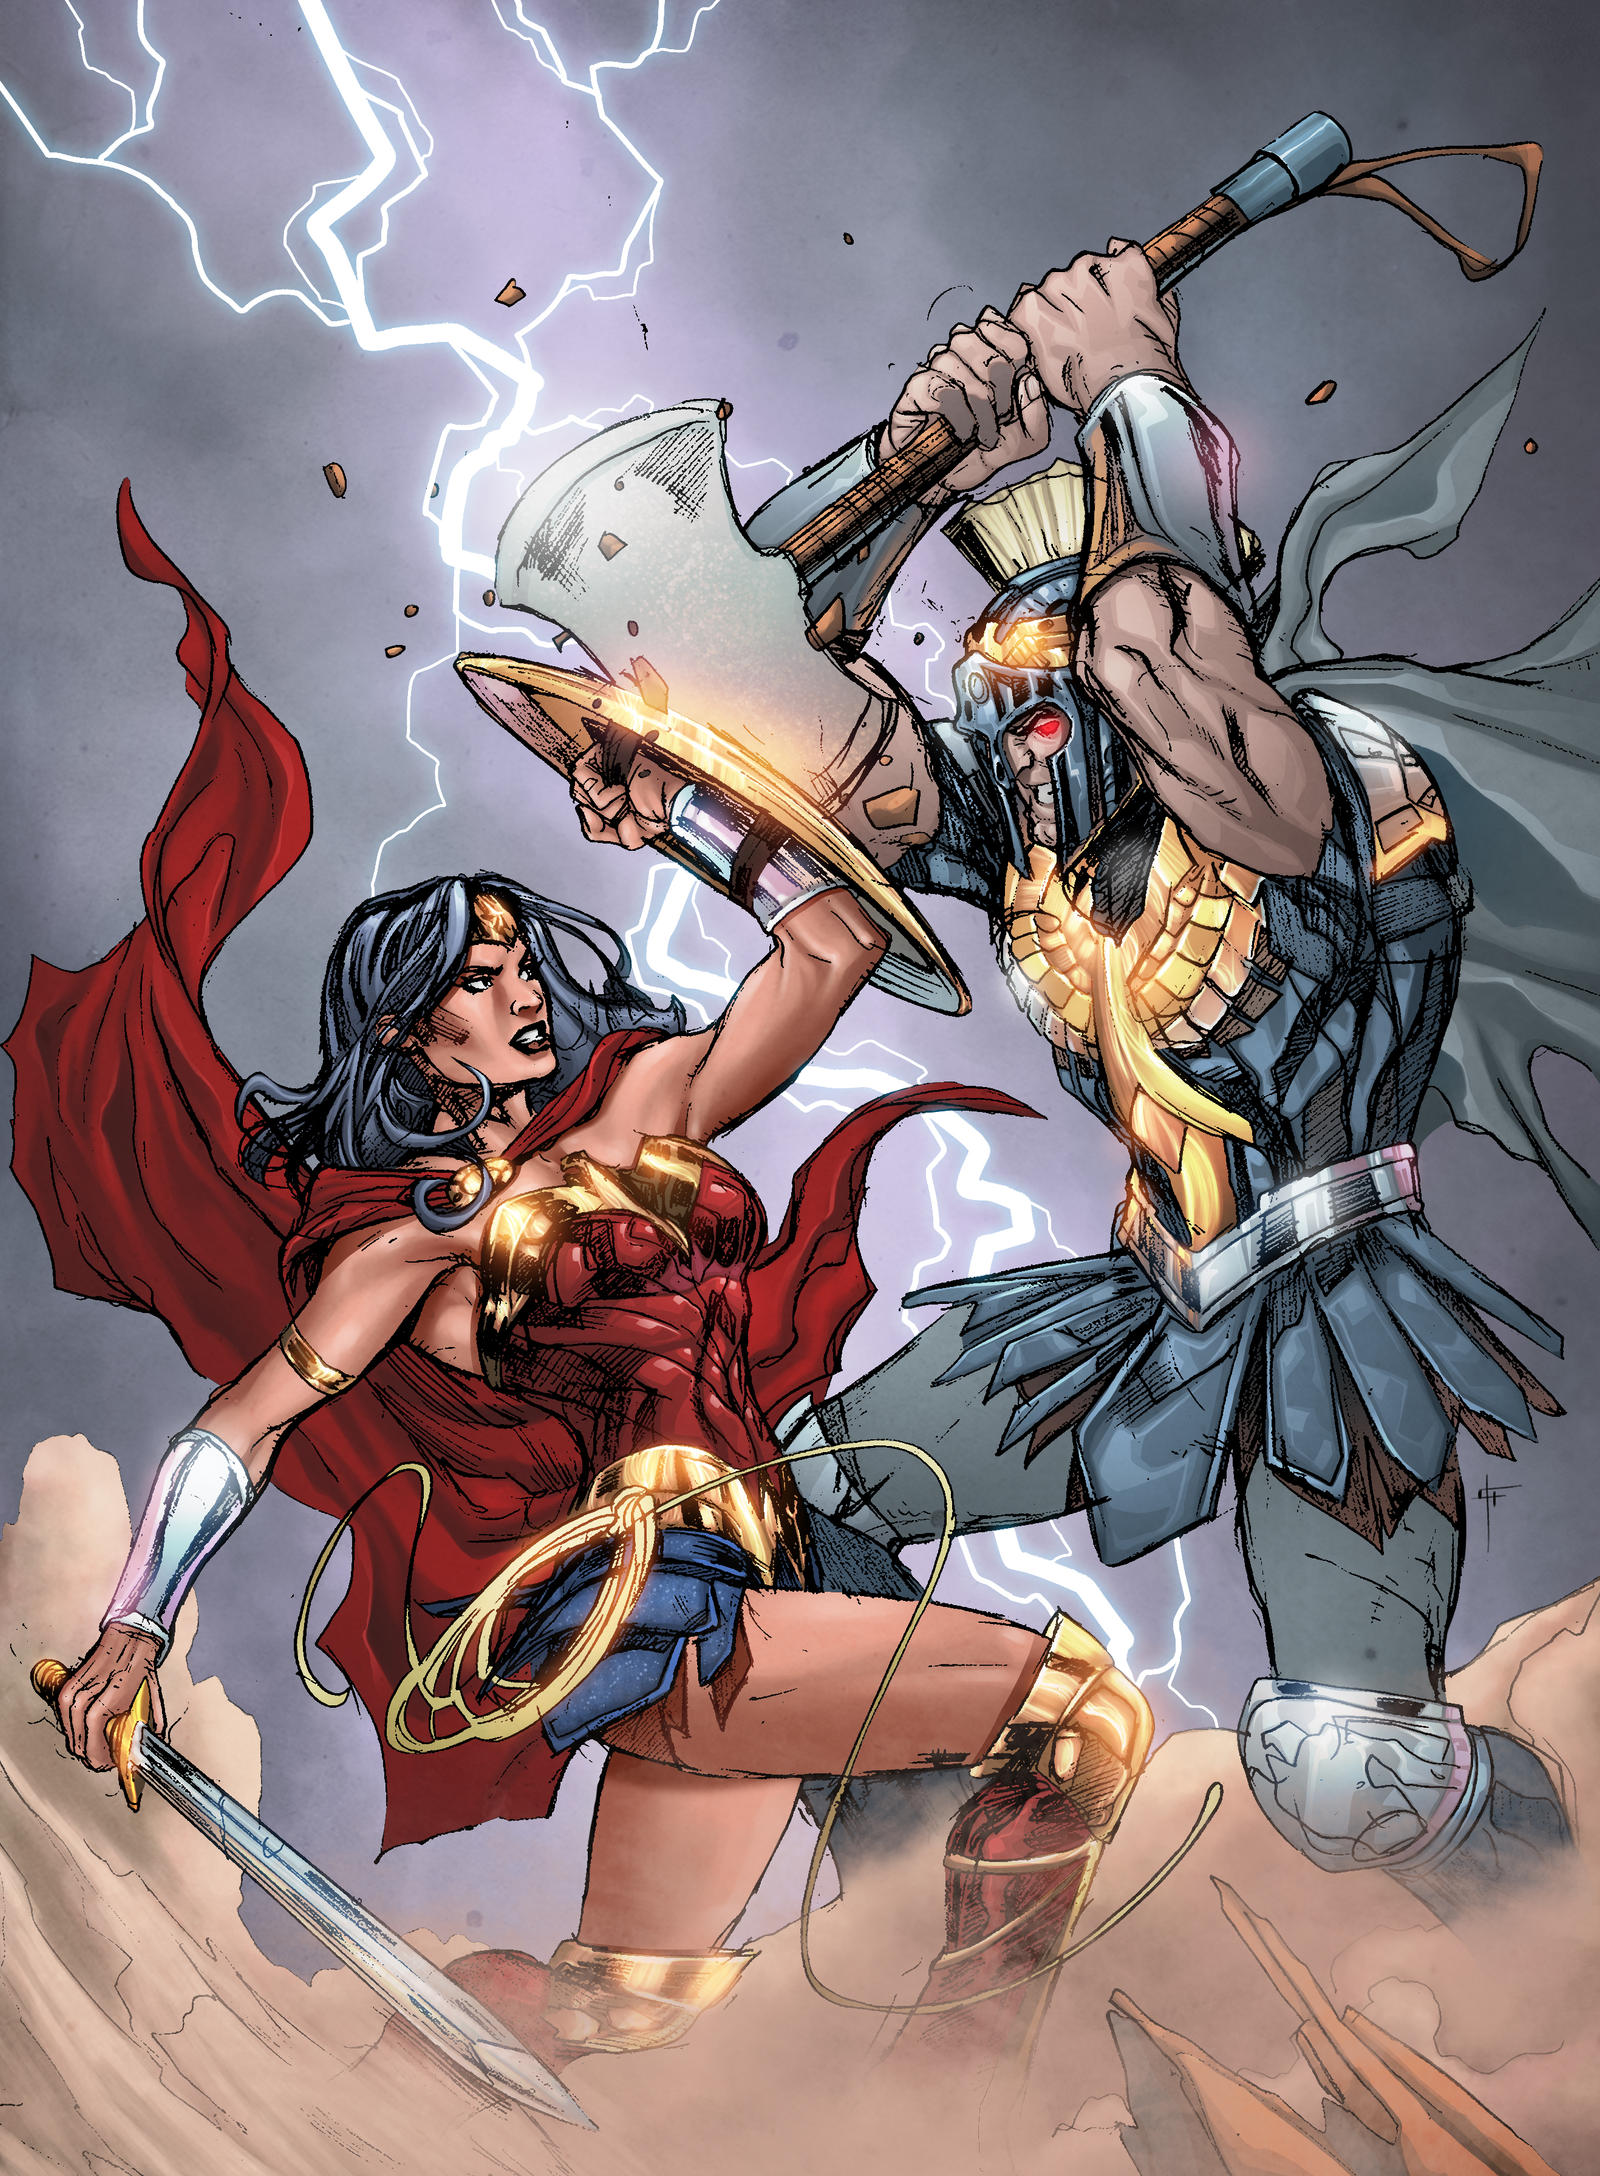 Wonder Woman by Mariano1990 on DeviantArt